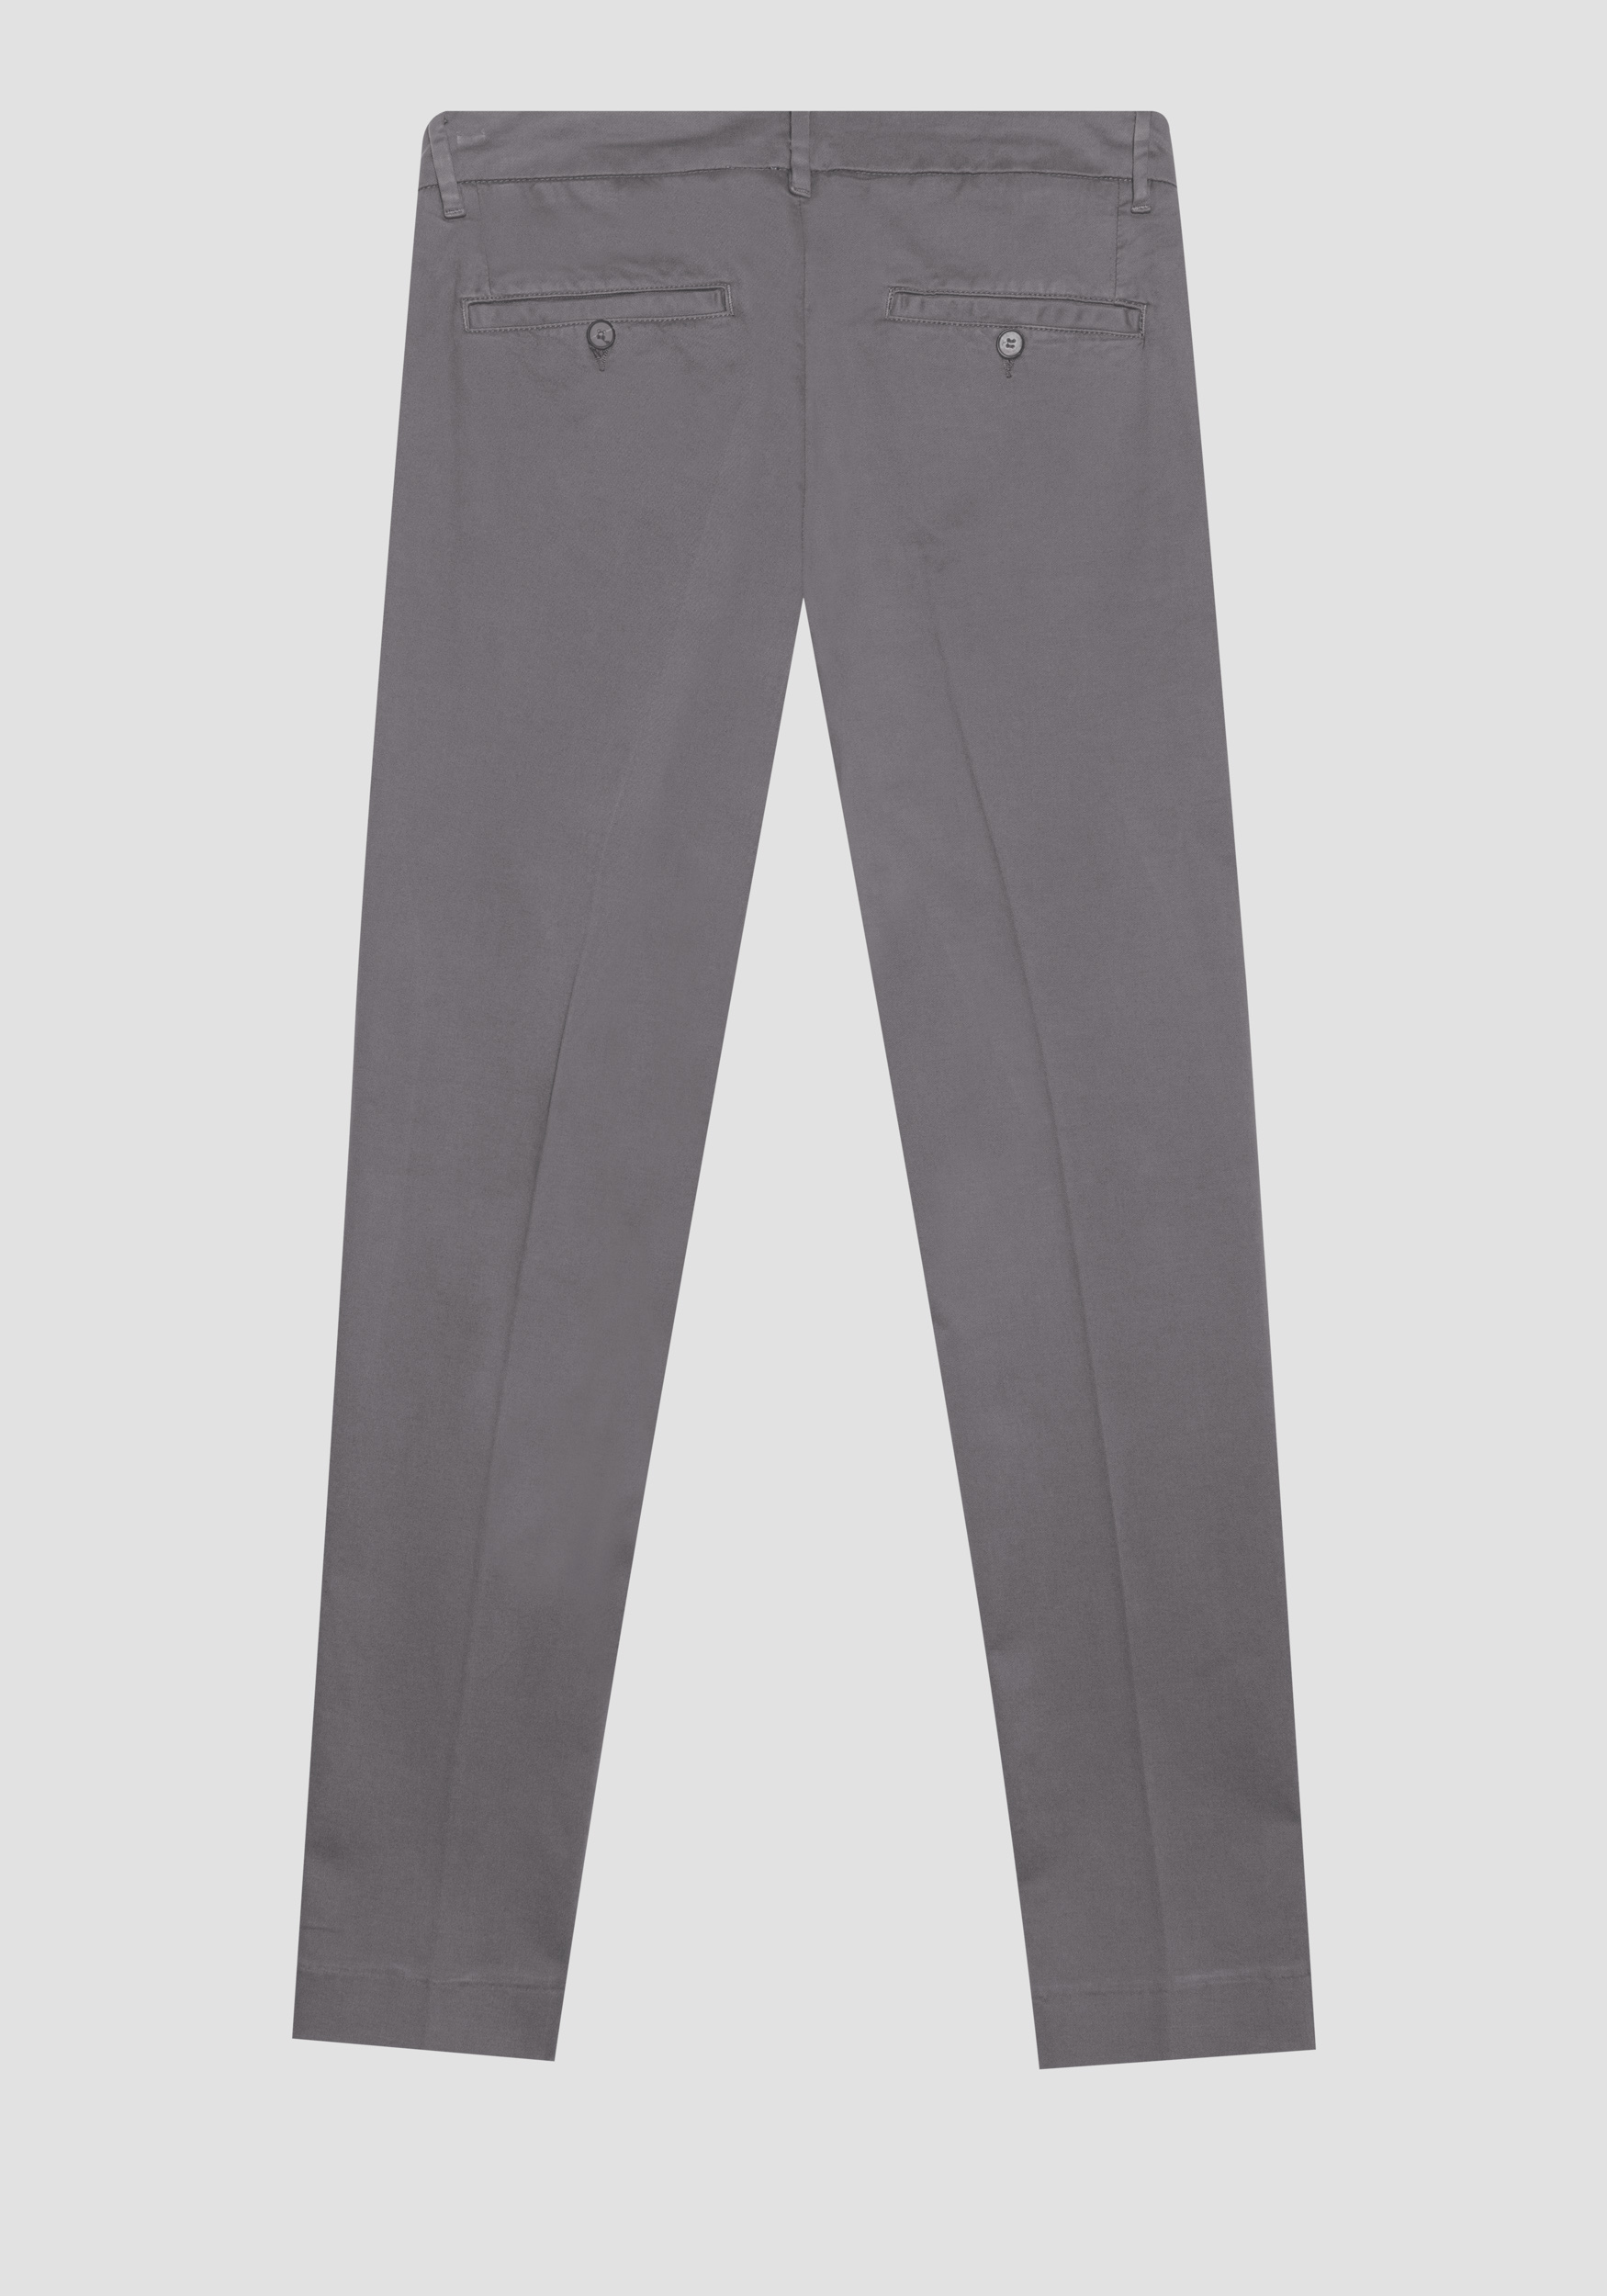 Antony Morato Pantalon Skinny Fit Bryan En Coton Doux Elastique Micro-Armure Anthracite | Homme Pantalons